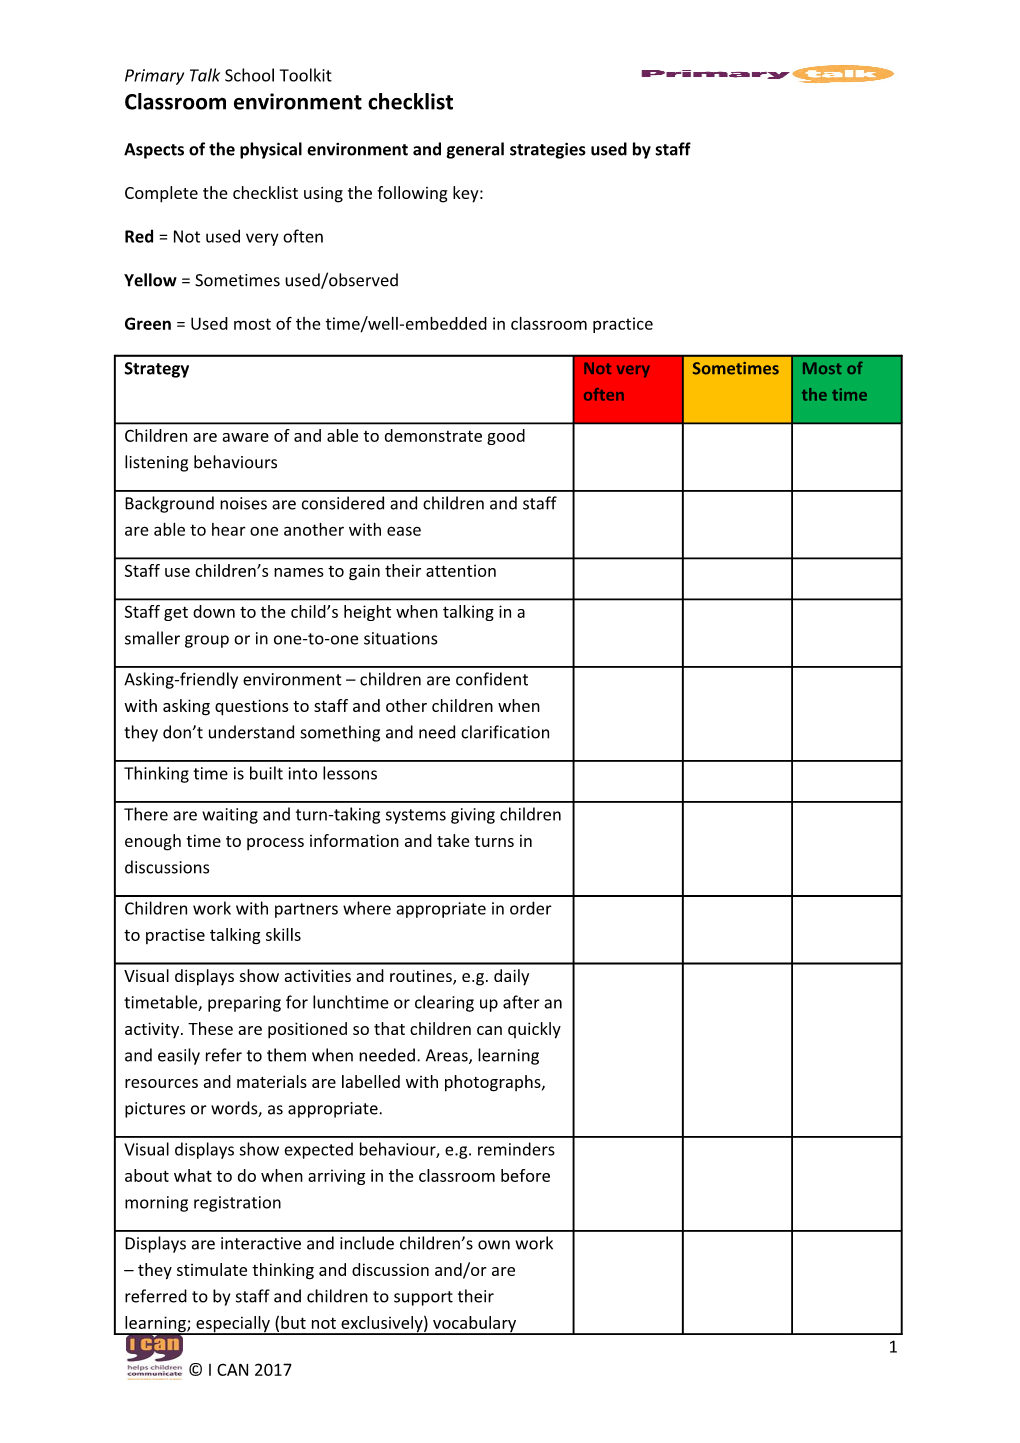 Classroom Environment Checklist